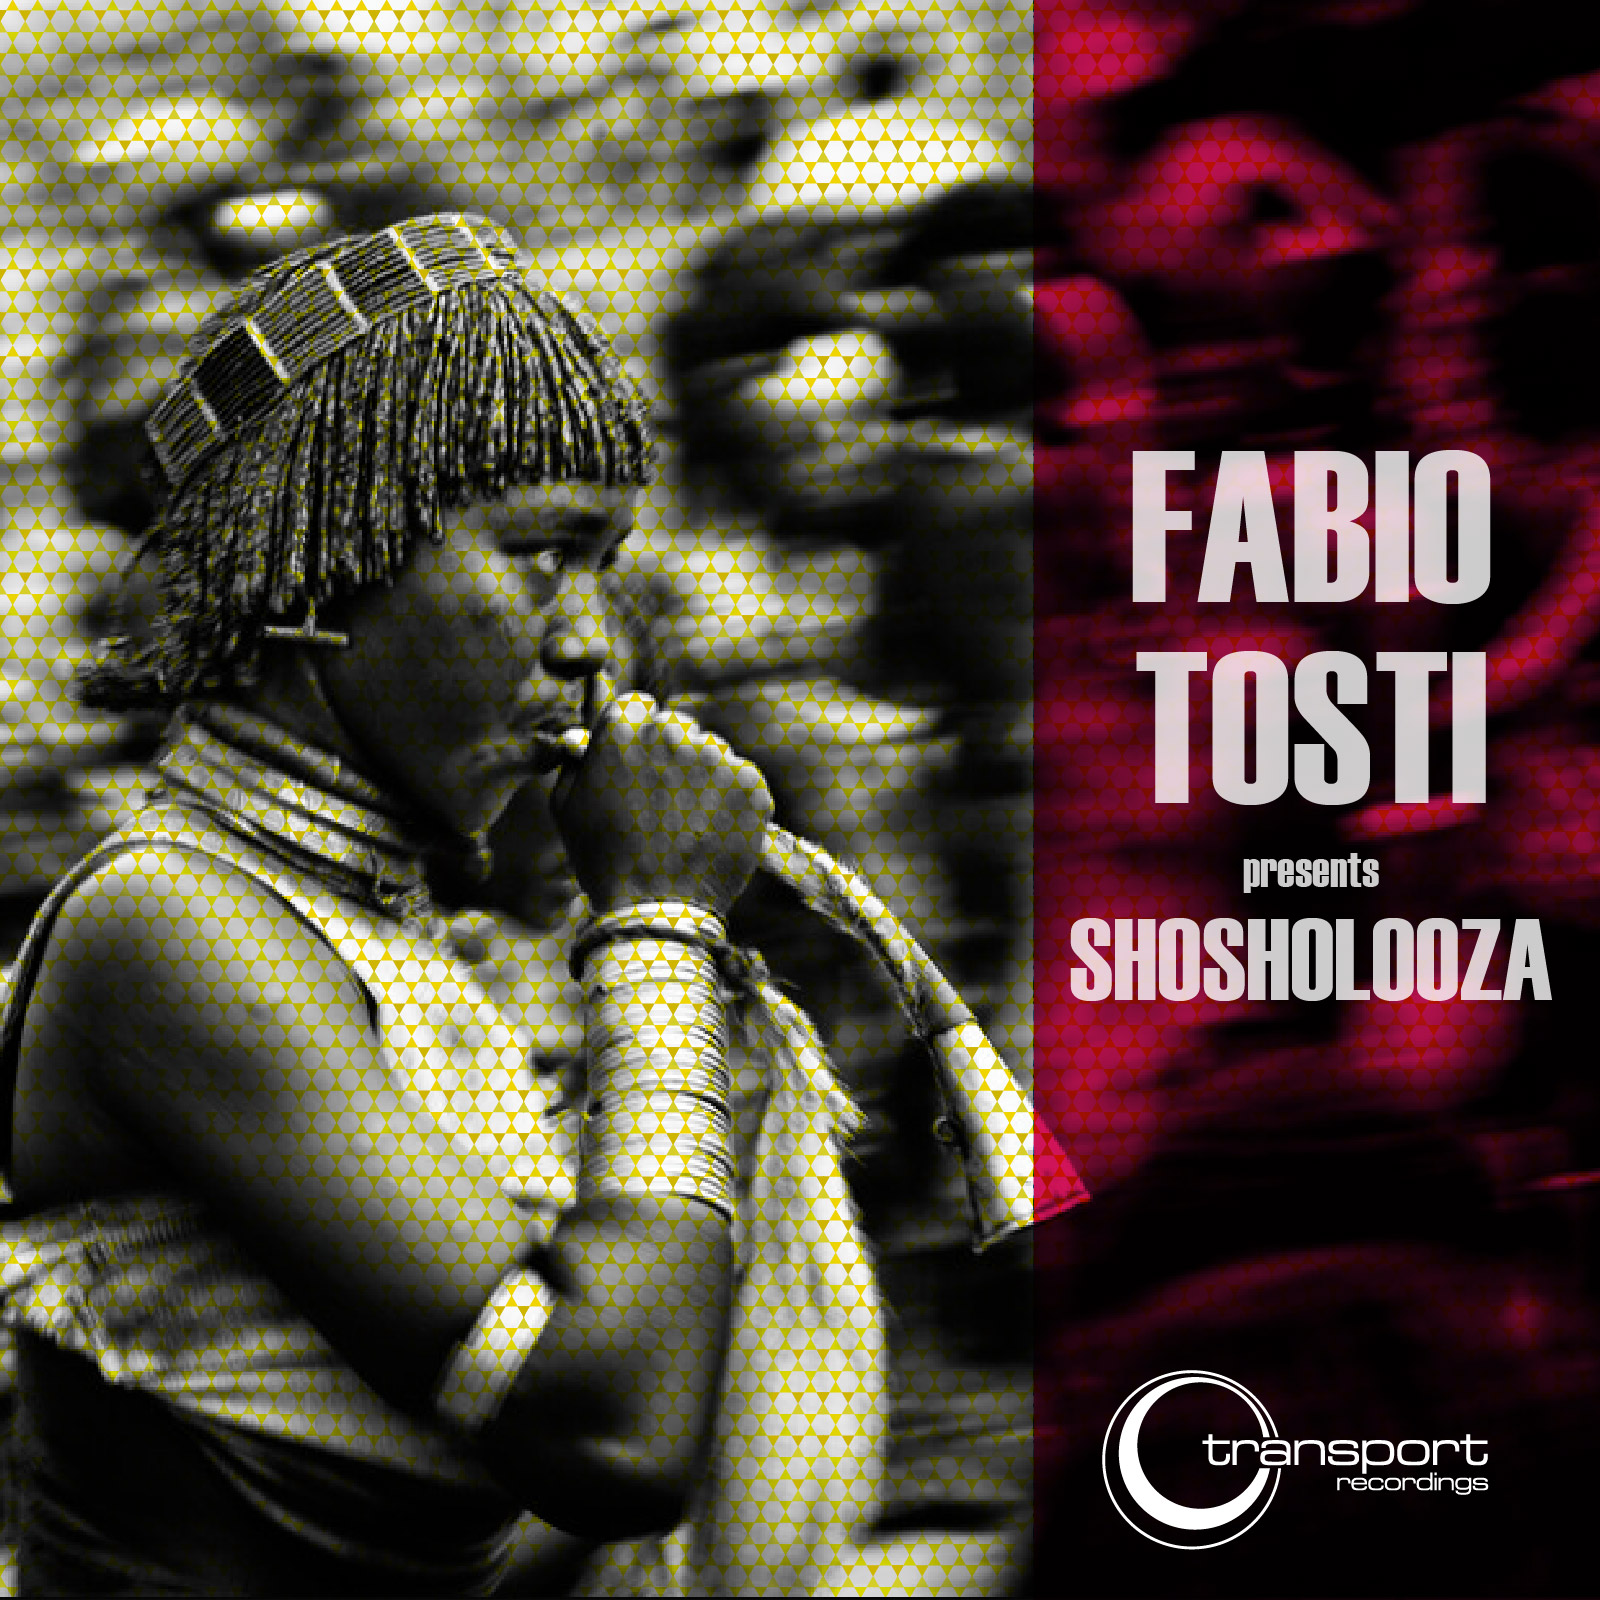 Fabio Tosti (Shosholooza)